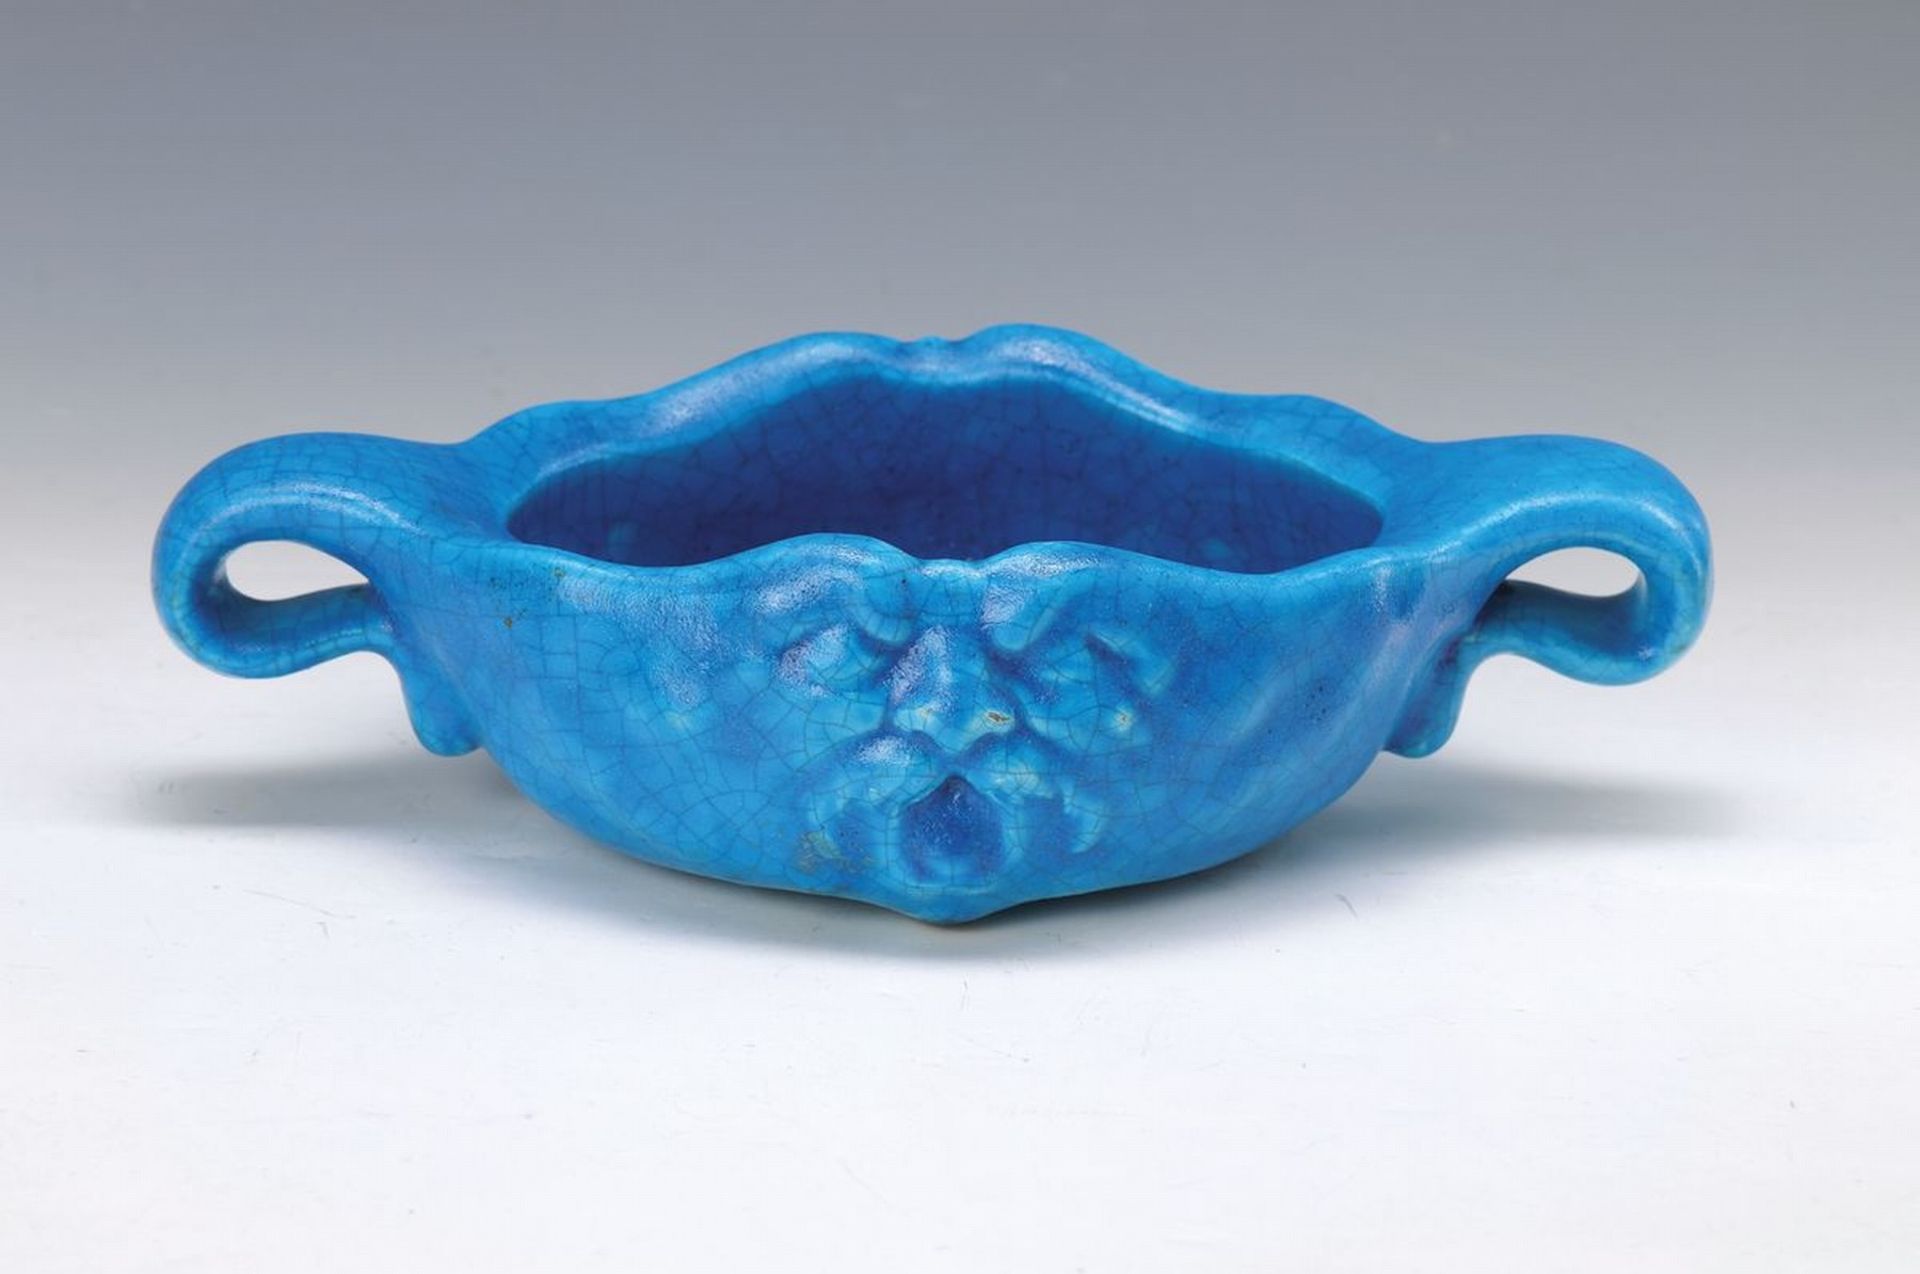 Schale, Edmond Lachenal, um 1910-20, Keramik, blau